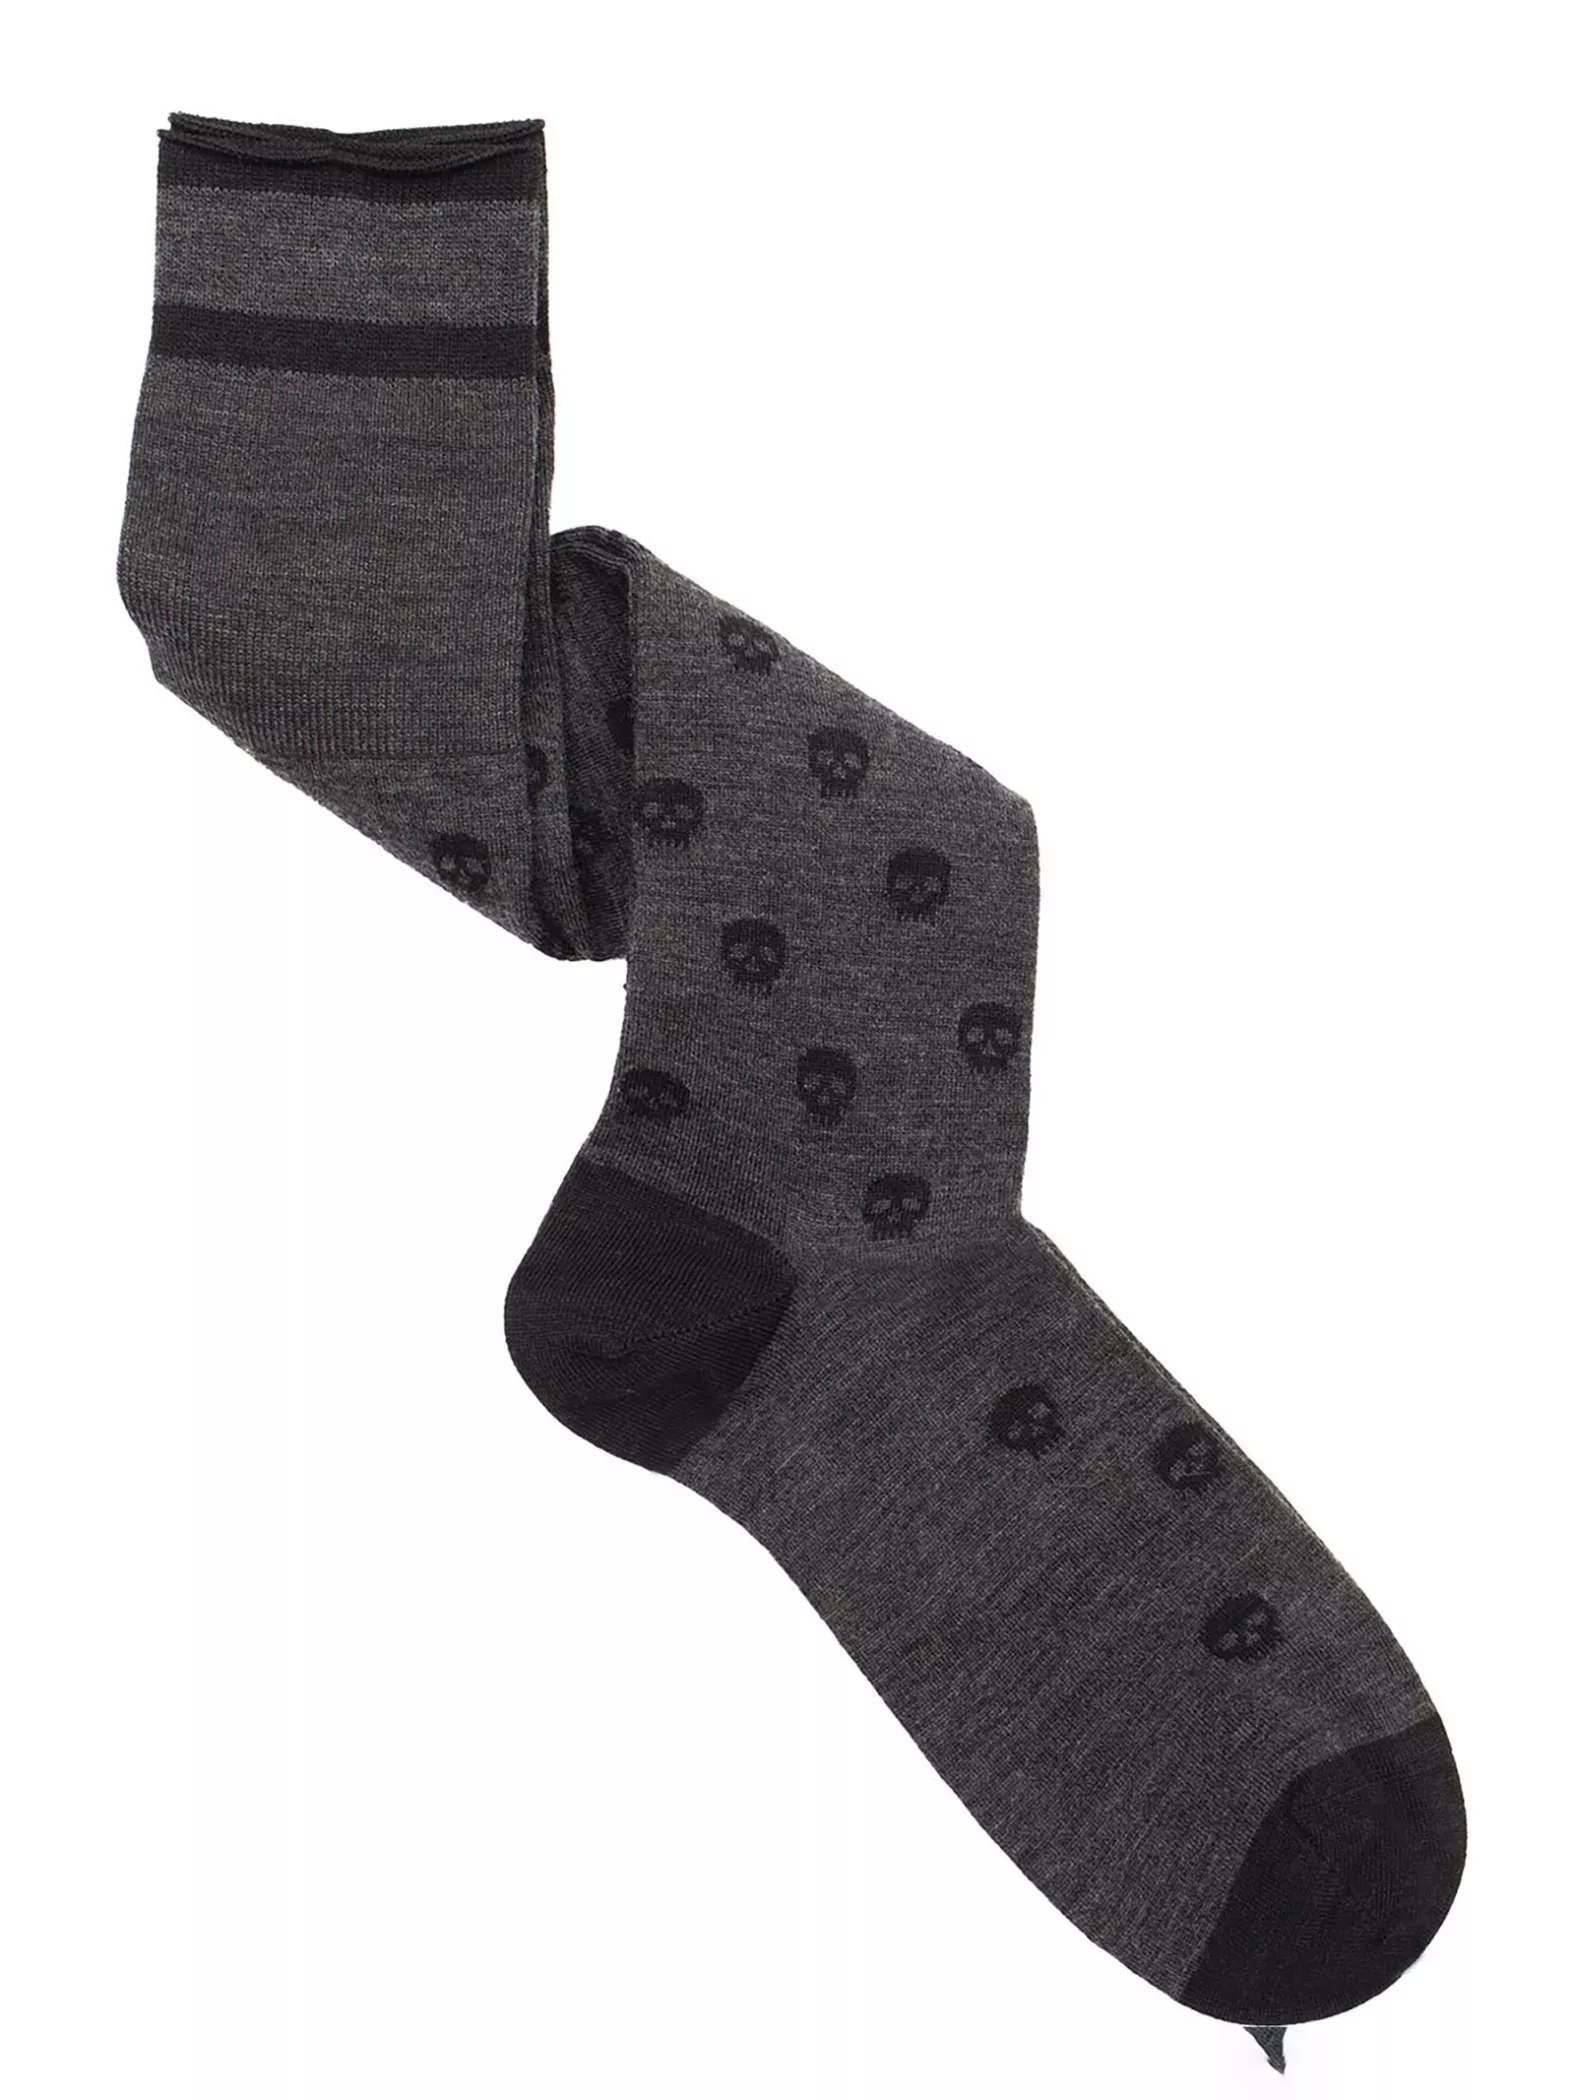 Men's skull patterned long socks in wool